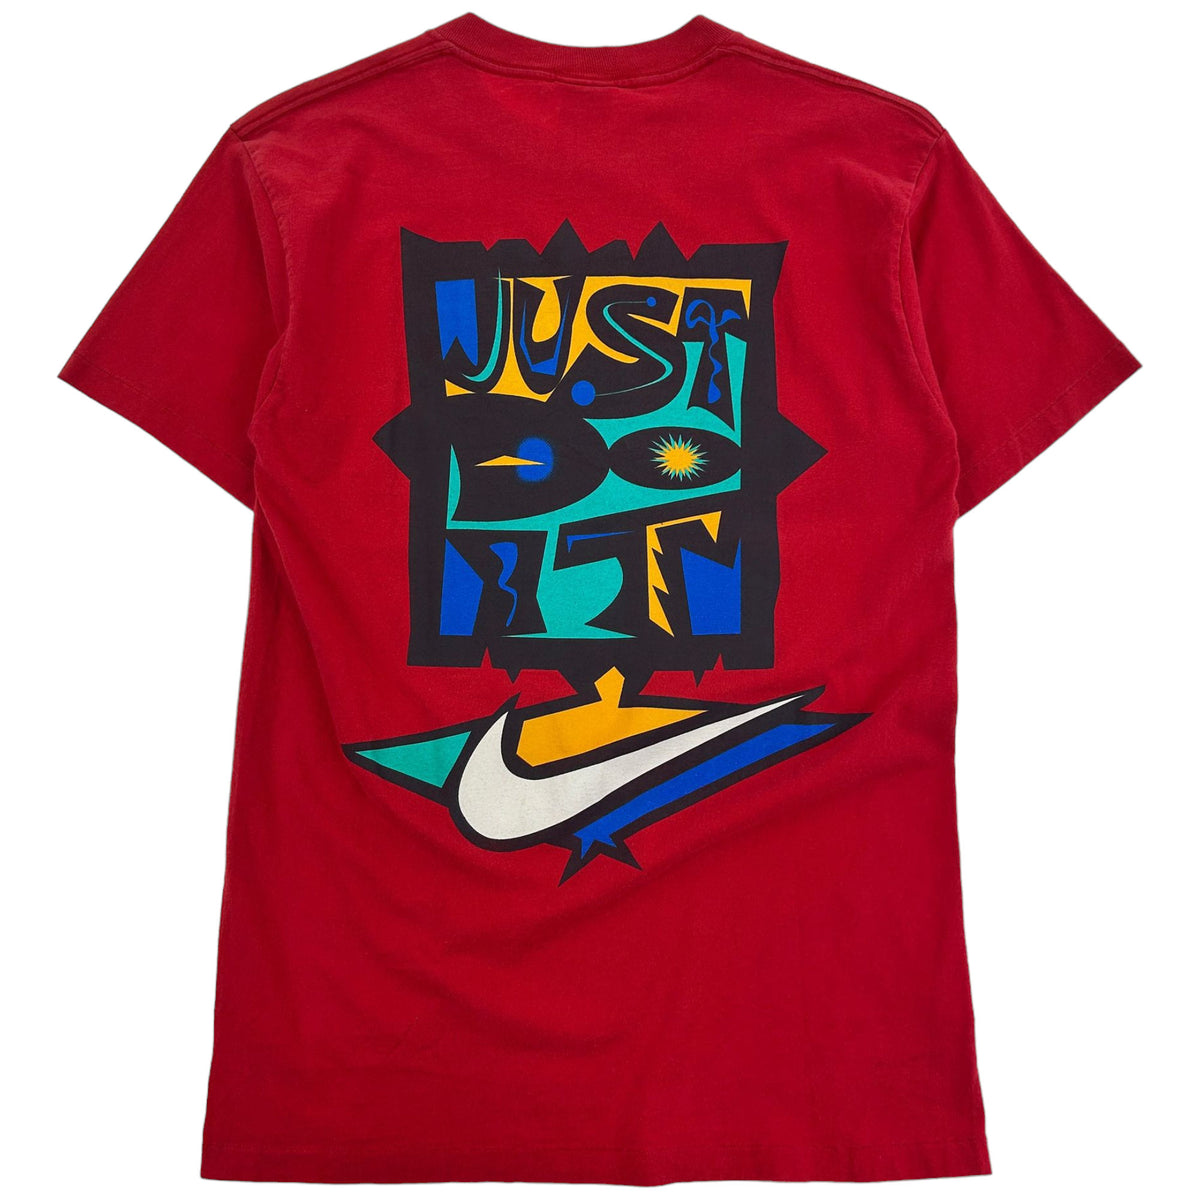 Vintage Nike Graphic T-Shirt Size M